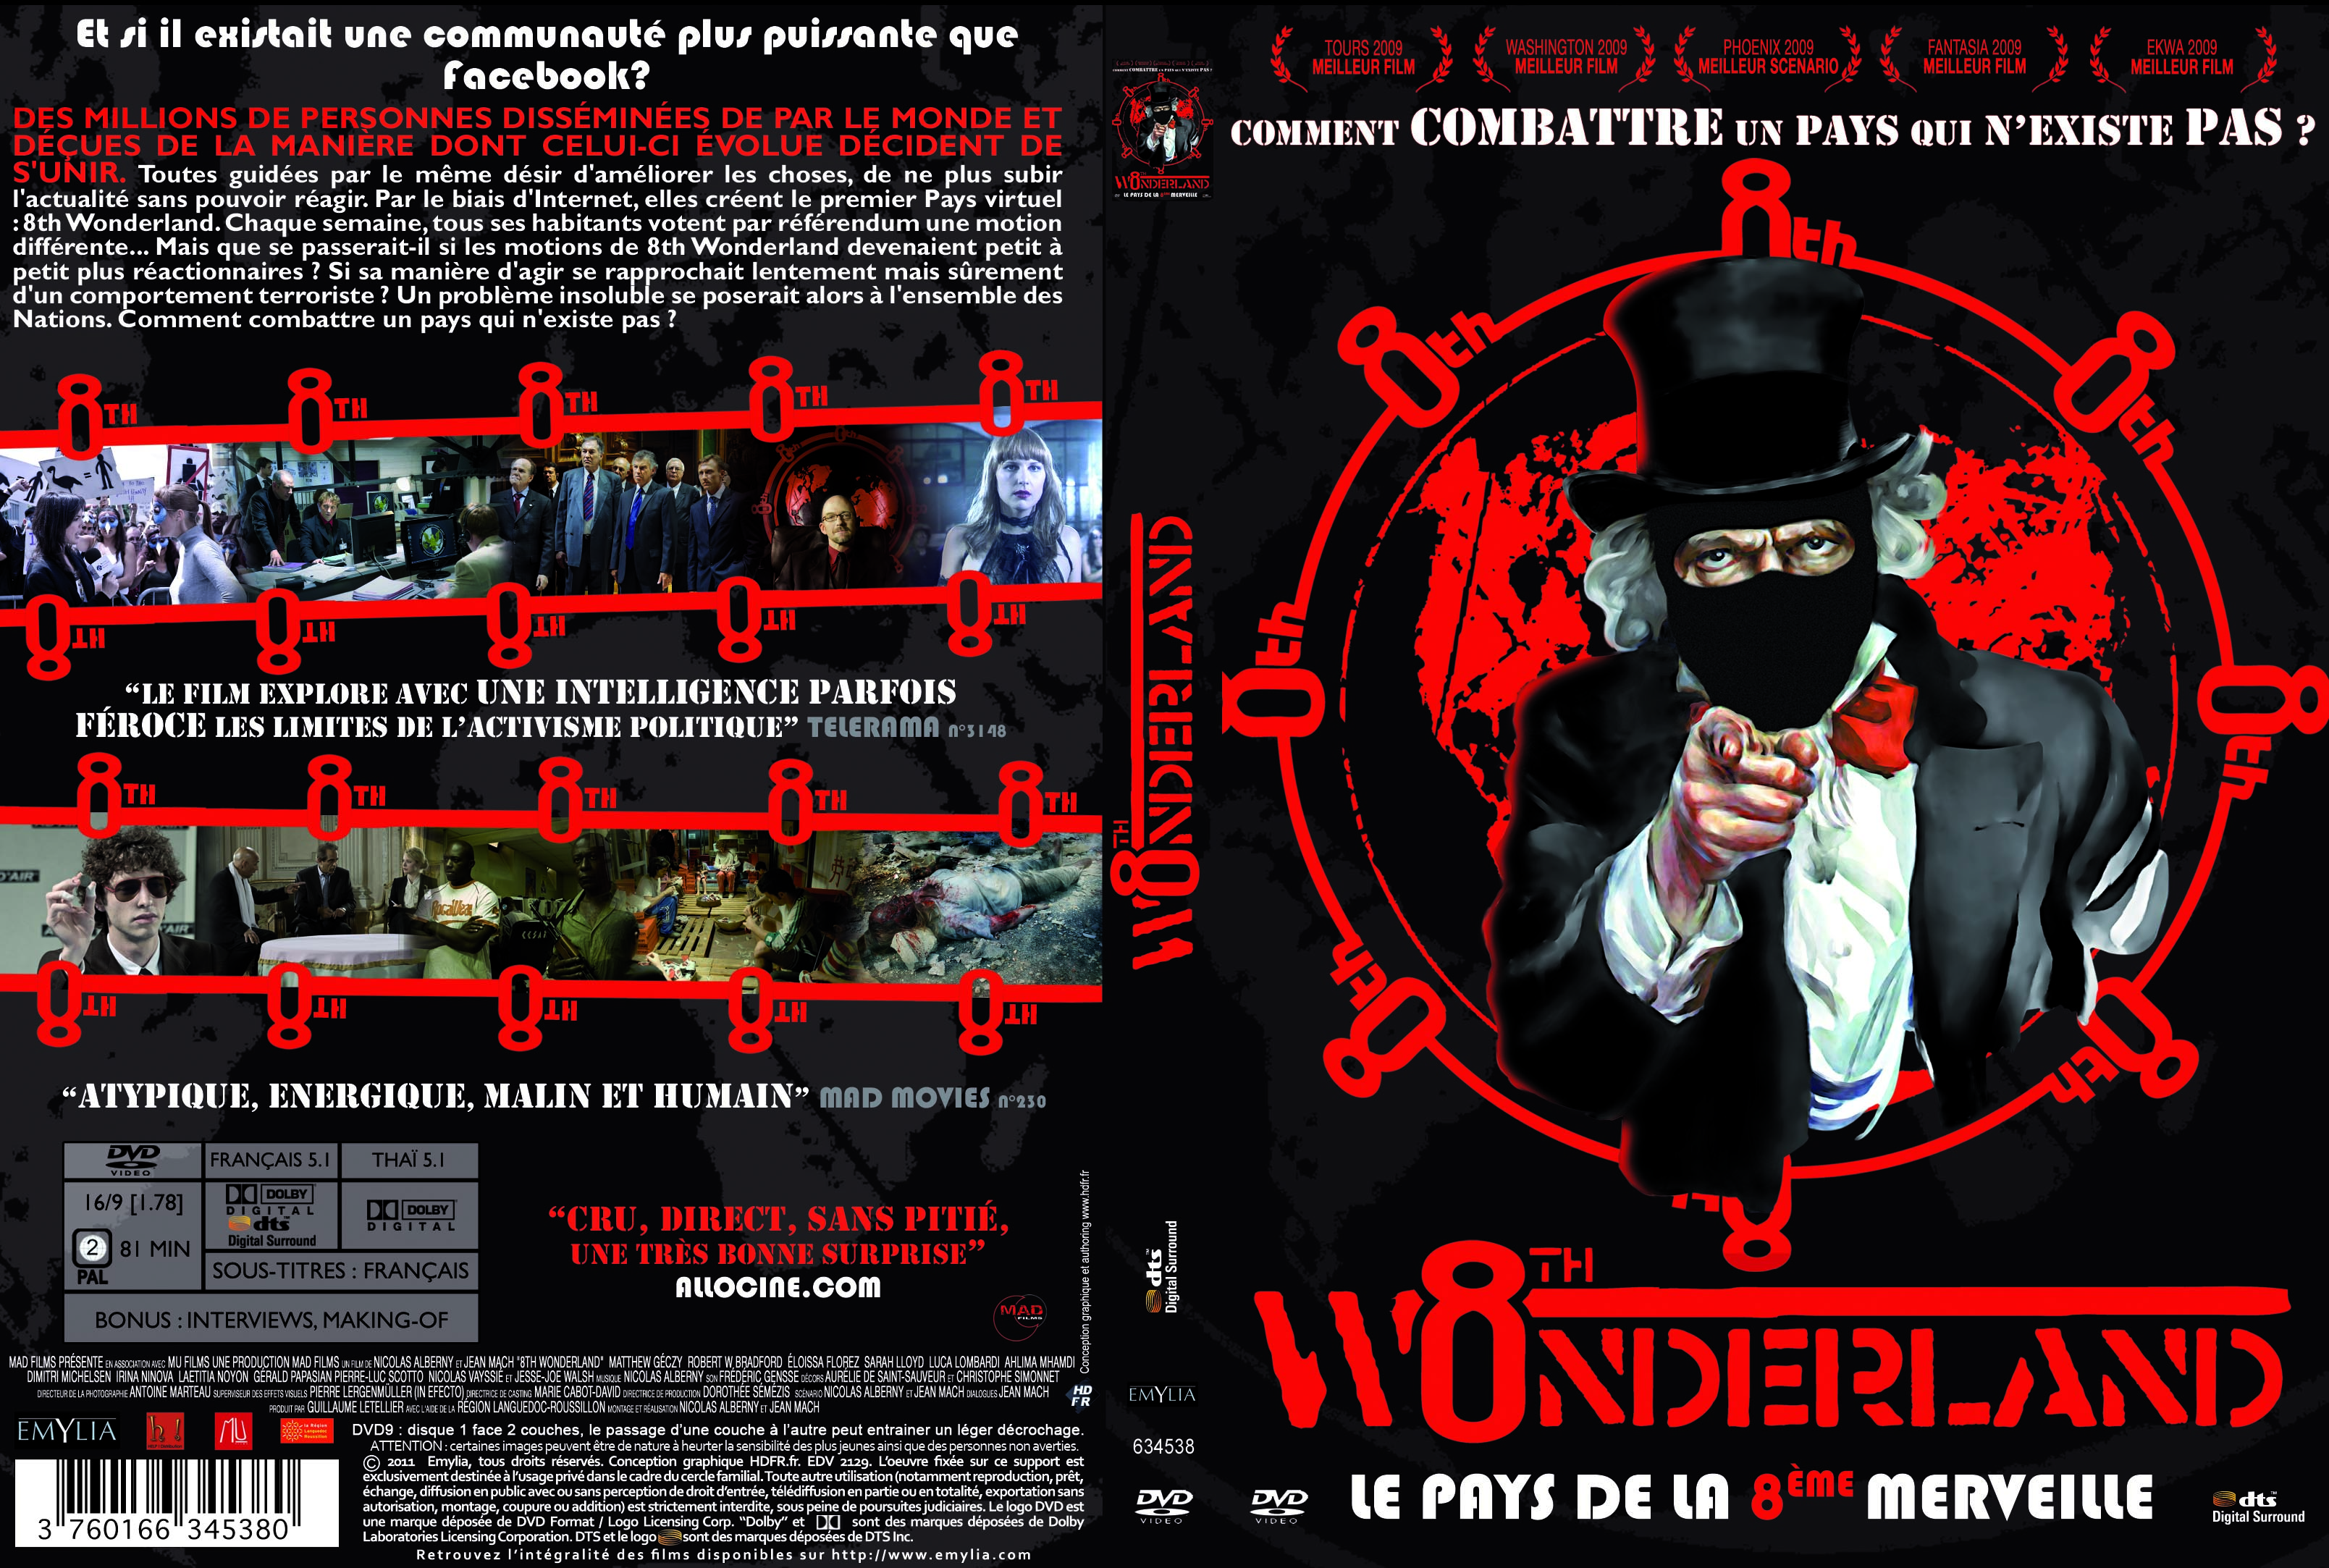 Jaquette DVD 8th wonderland